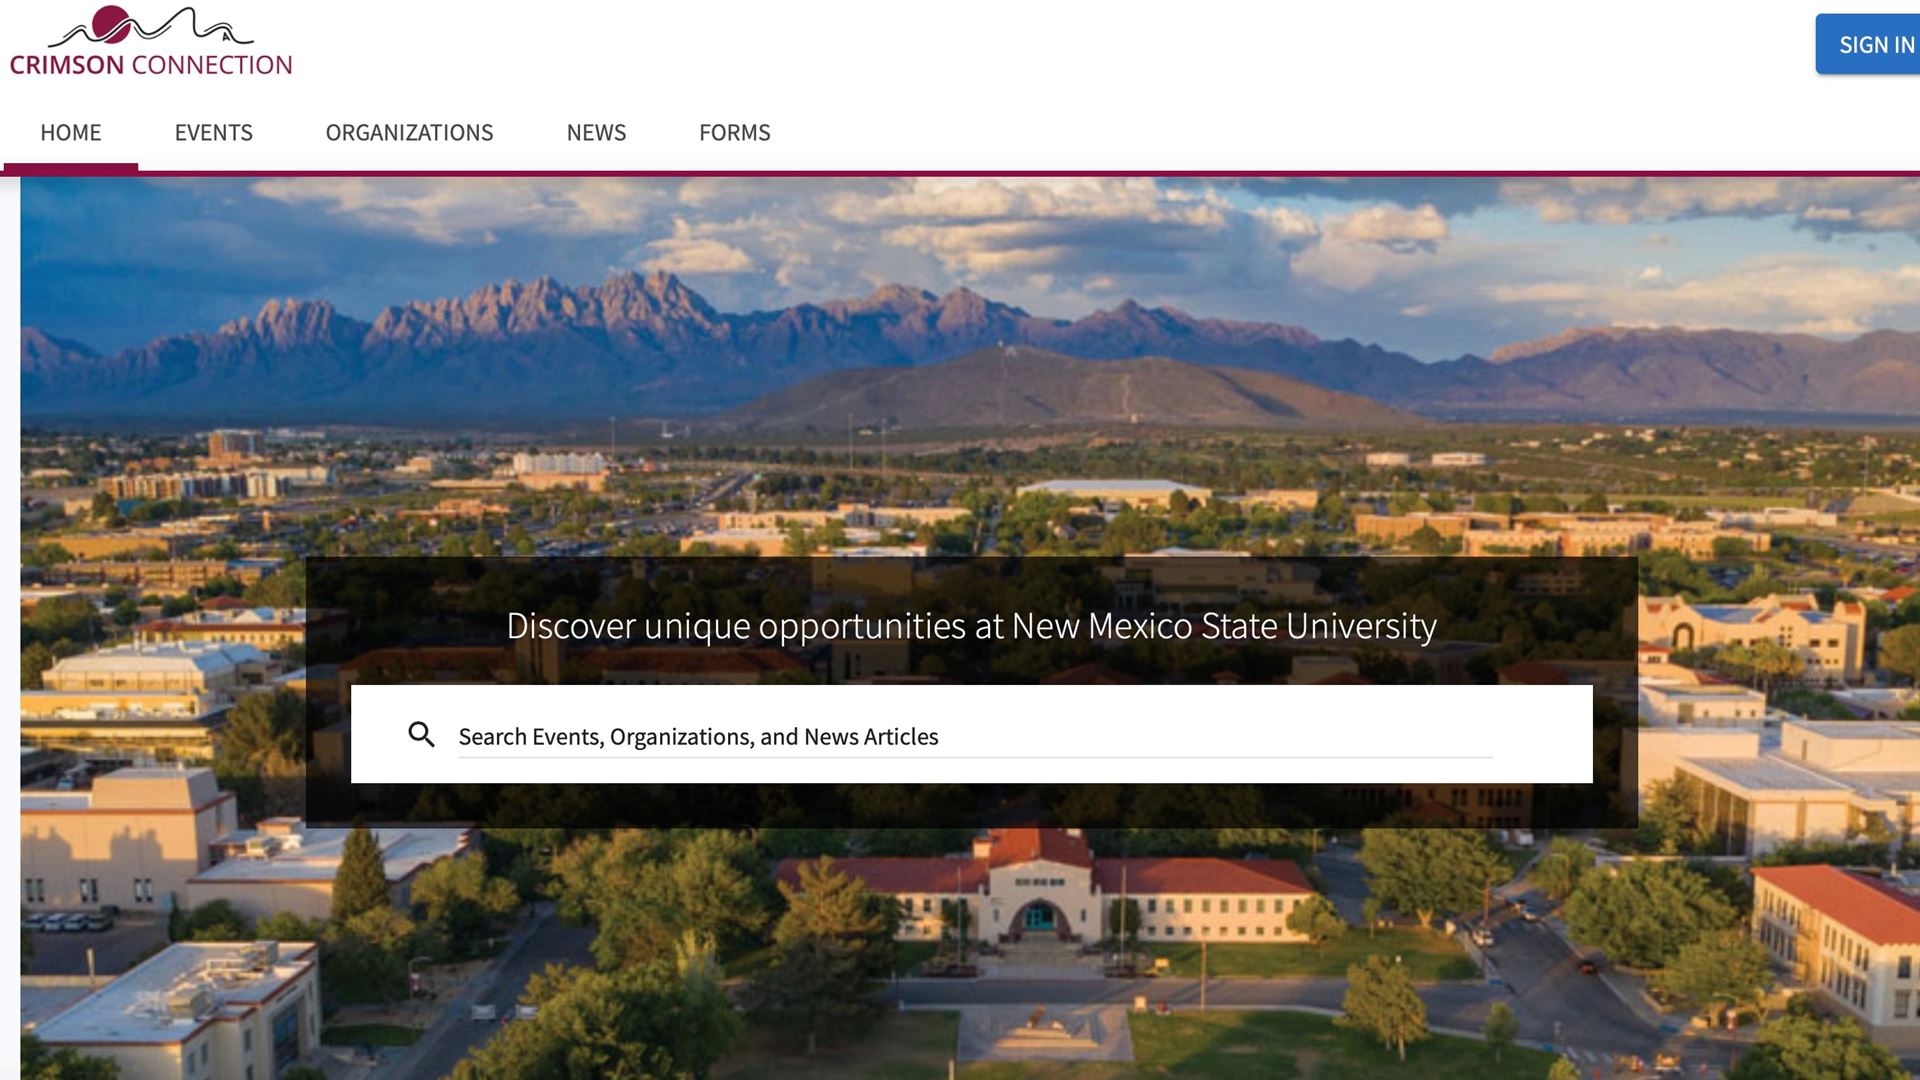 NMSU’s new portal, Crimson Connection, encourages student engagement on campus